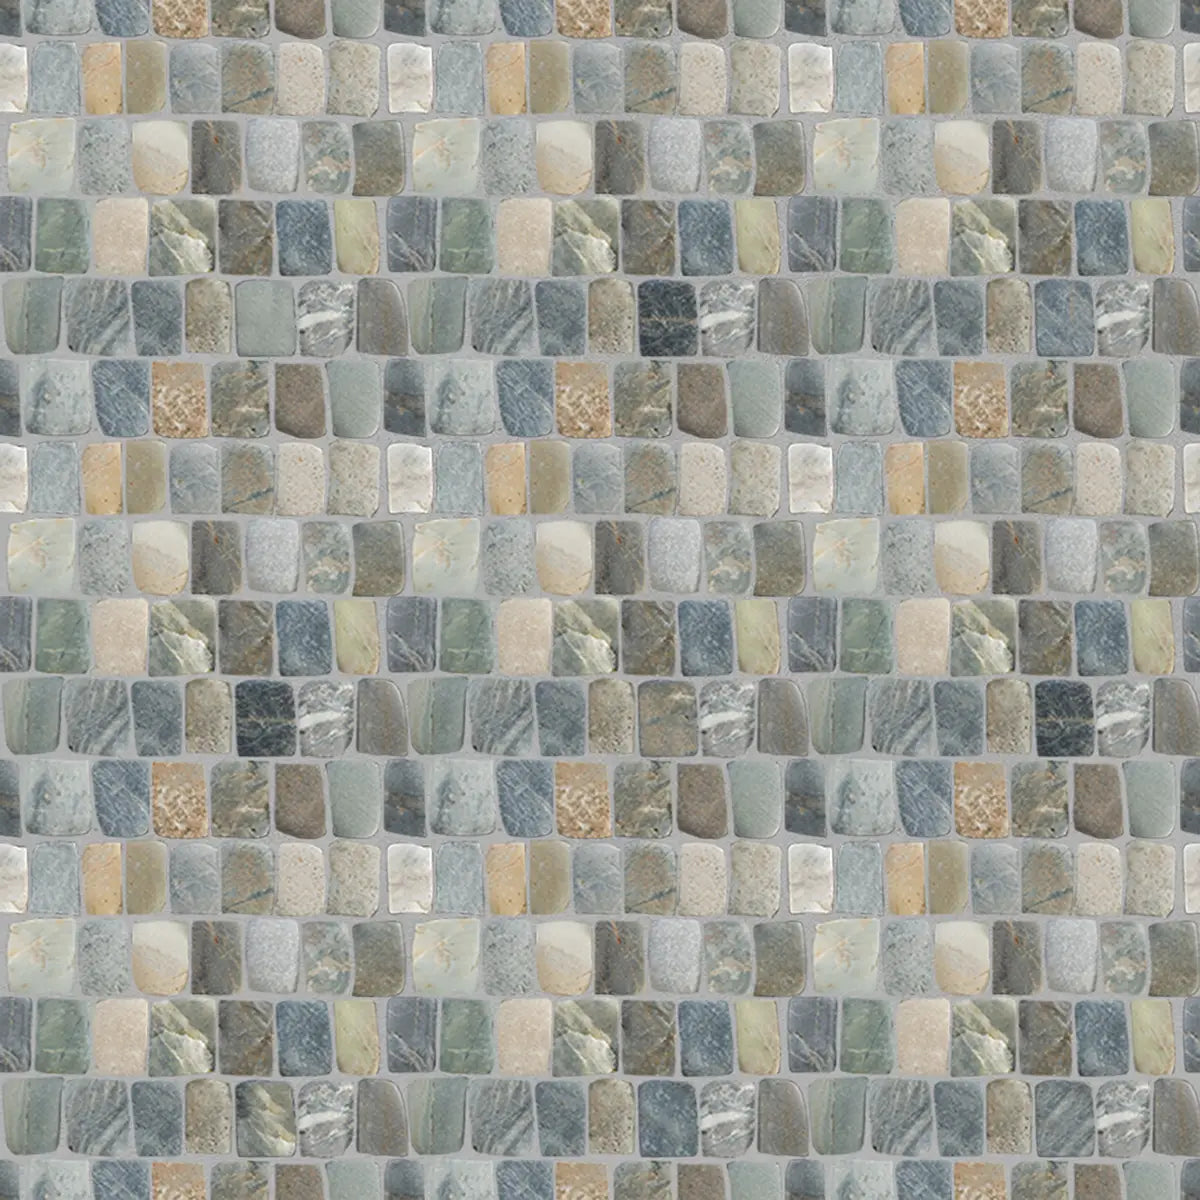 Natural Pebble Stone Mosaic Tile, Canine Mix Mosaic Tile